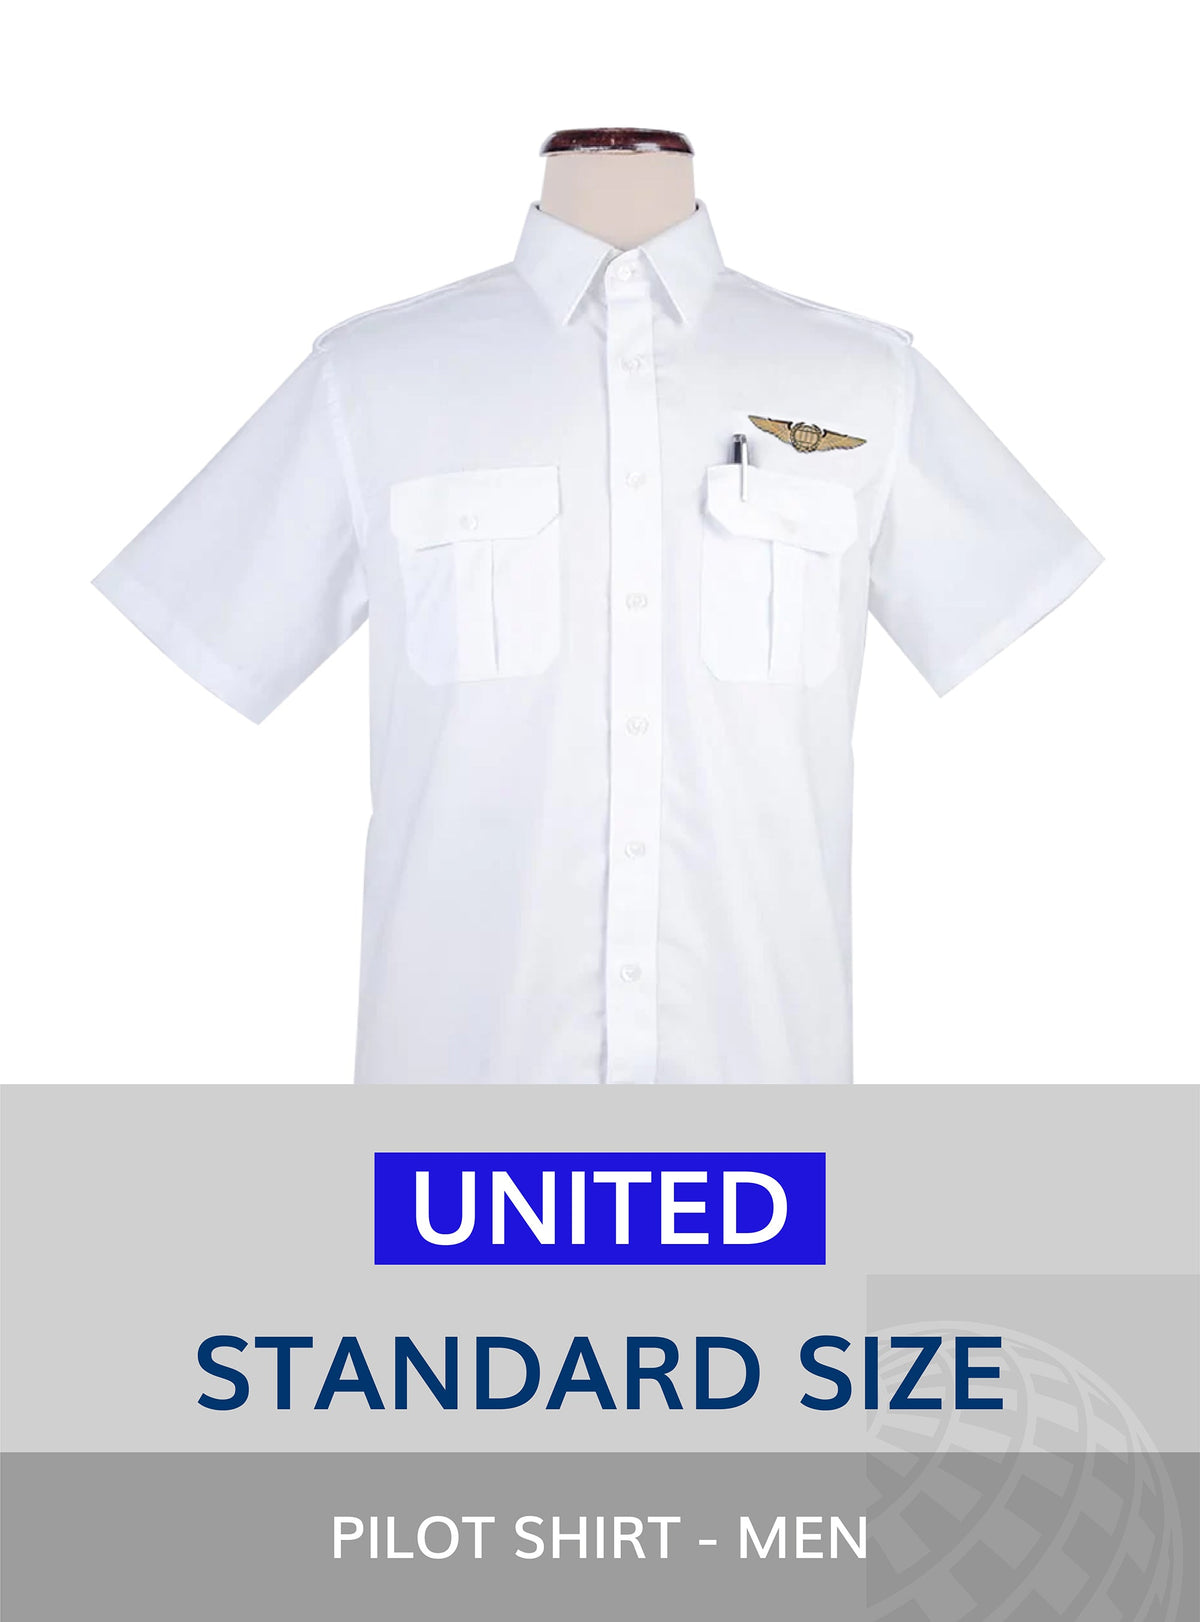 United Standard size pilot shit for men